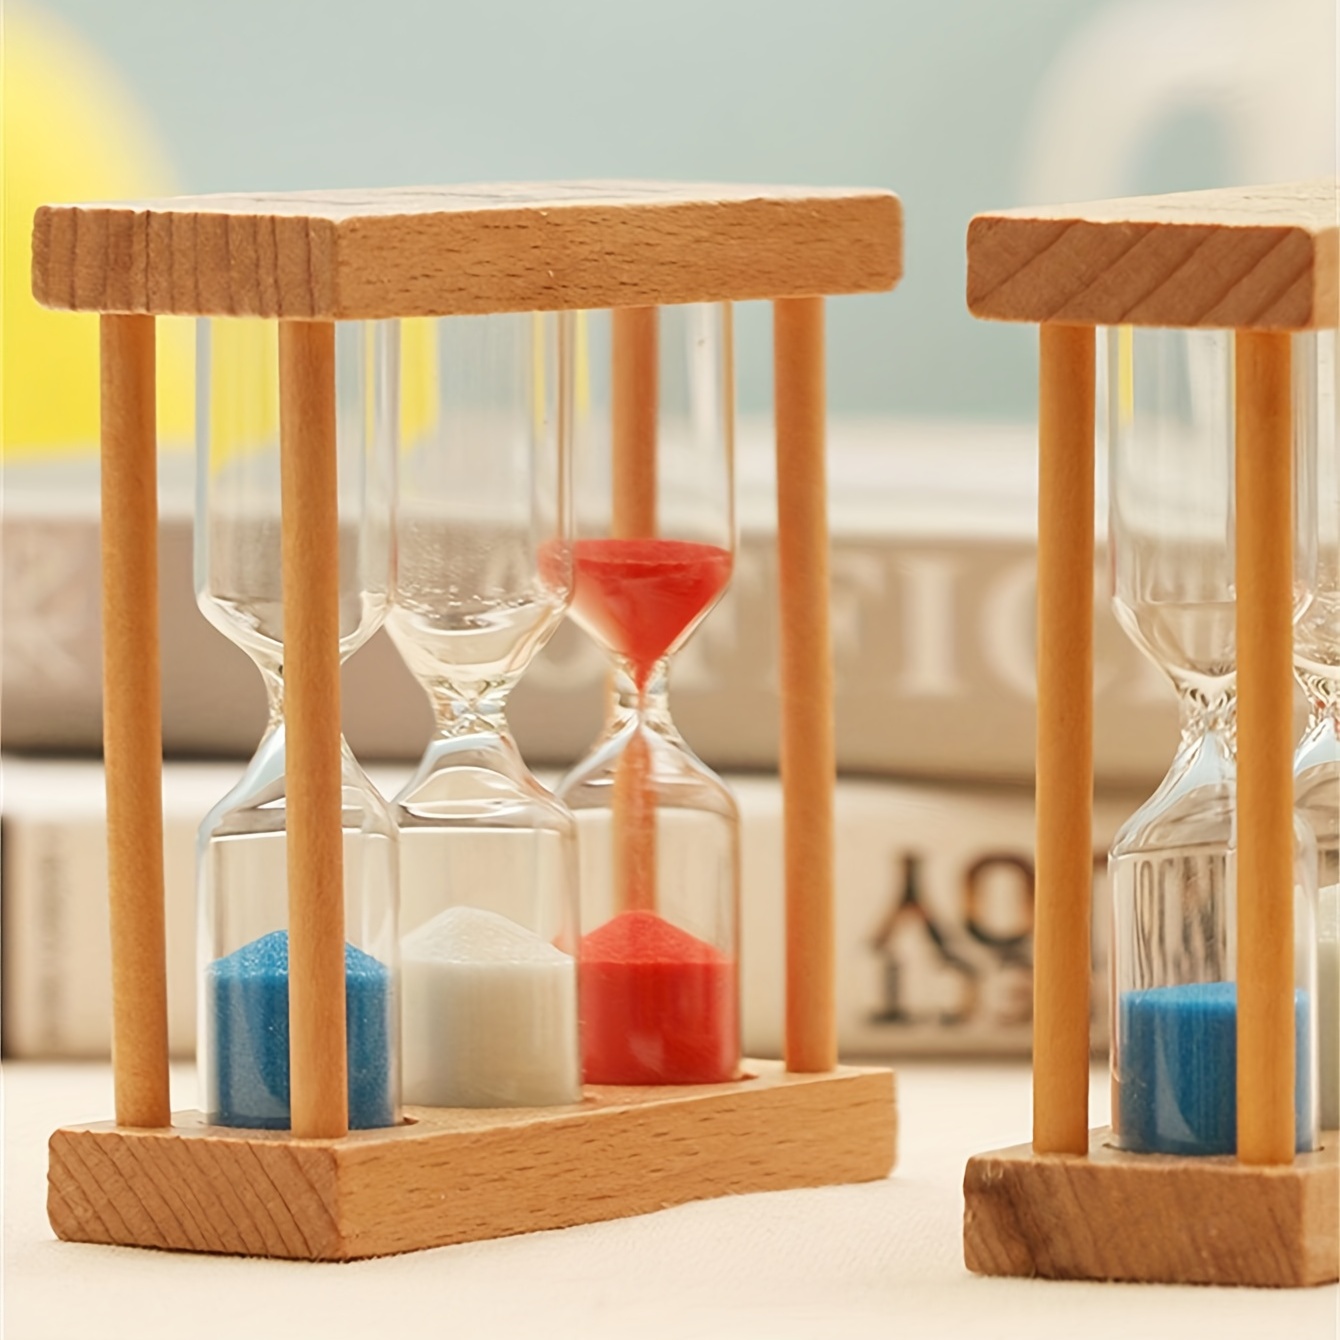  Reloj de arena de arena para niños, temporizador de arena de  reloj de arena de 1+3+5 minutos mini reloj de reloj de arena creativo  decoración de arena pequeños adornos regalo para